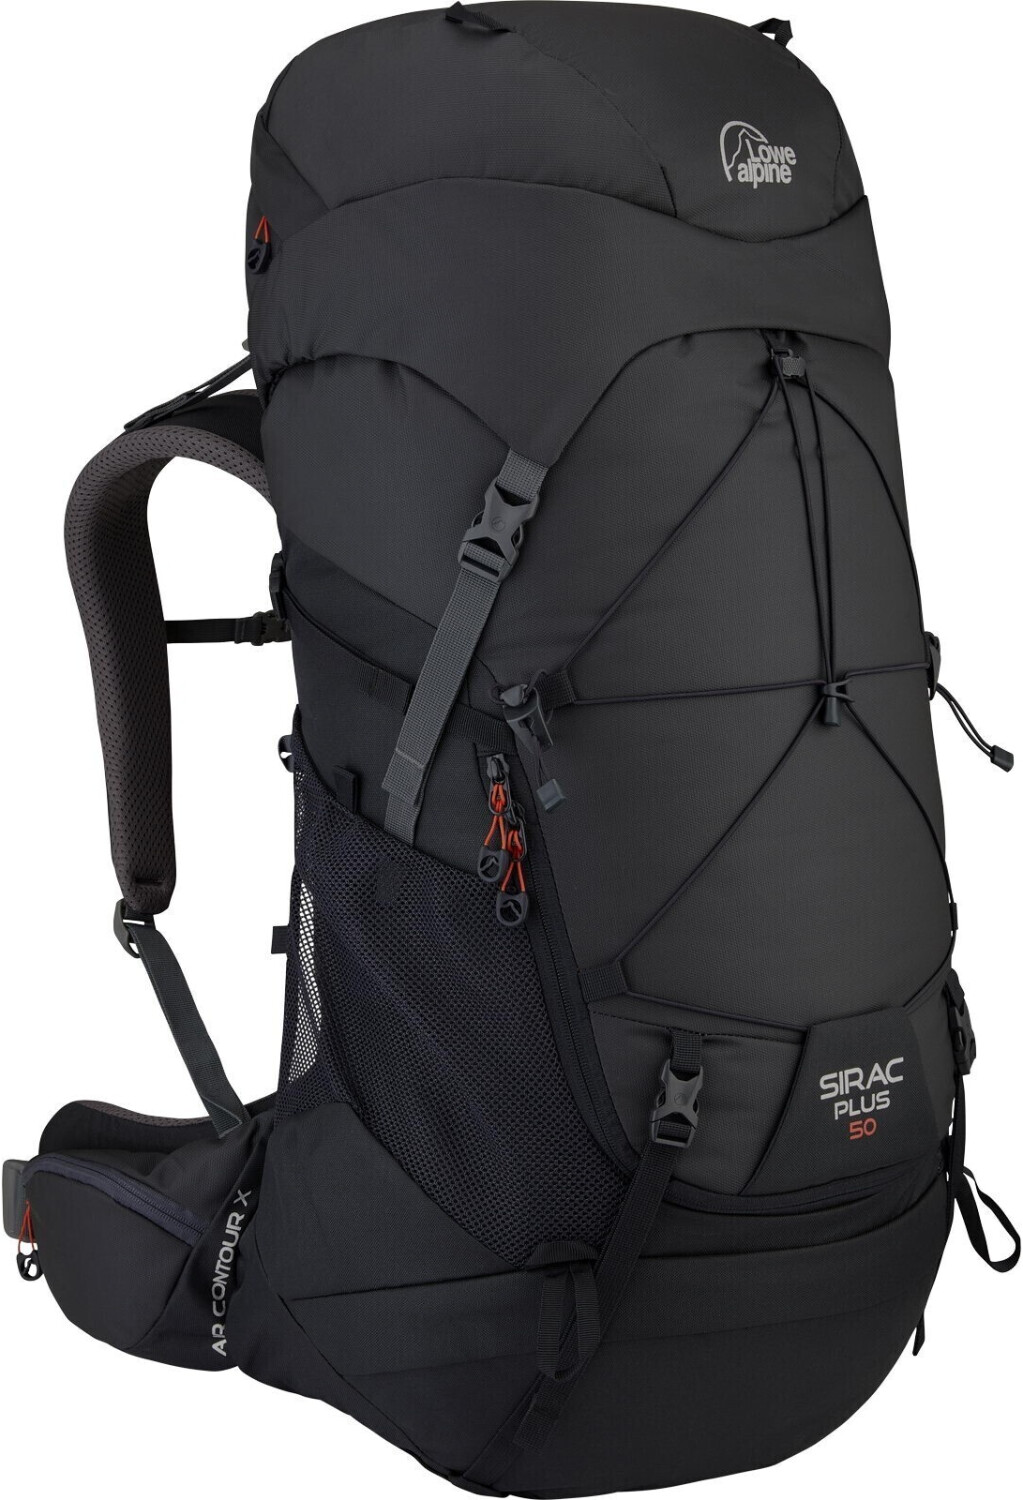 Photos - Backpack Lowe Alpine Alpine Sirac Plus 50 M/L ebony 